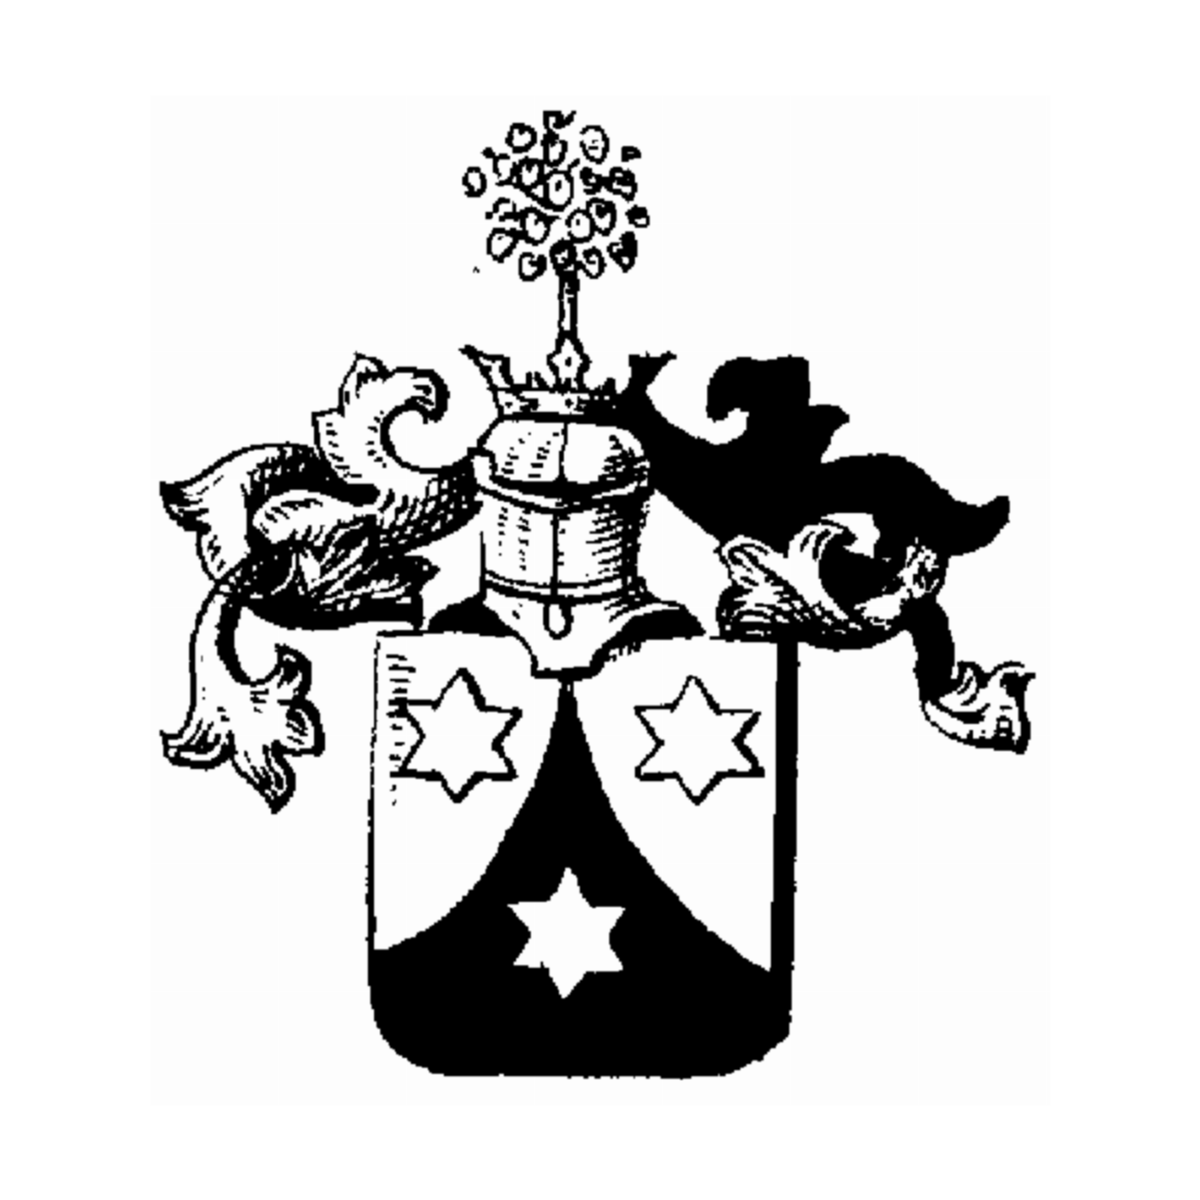 Coat of arms of family Morli